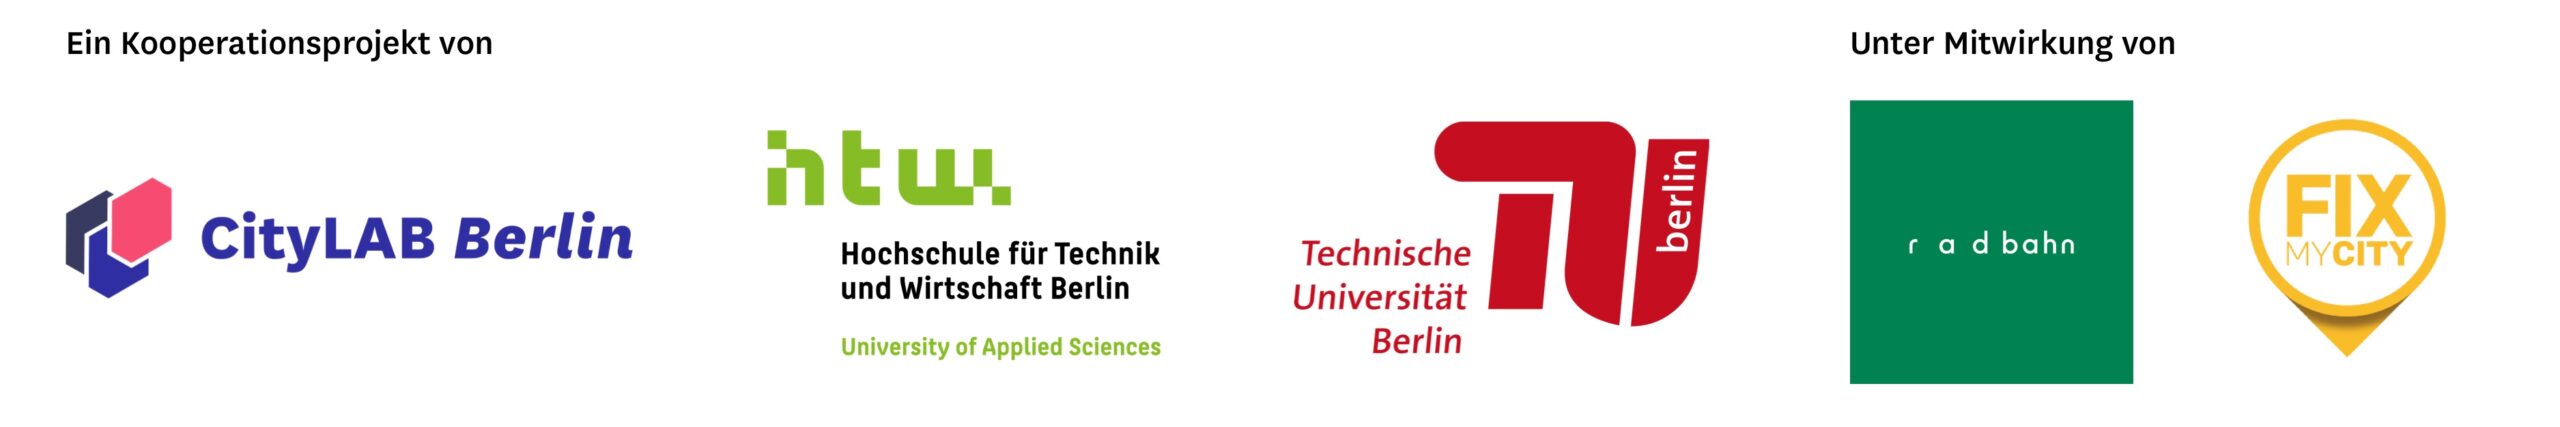 Logos von CityLAB Berlin, HTW Berlin, TU Berlin, Reallabor Radbahn und FixMyCity 